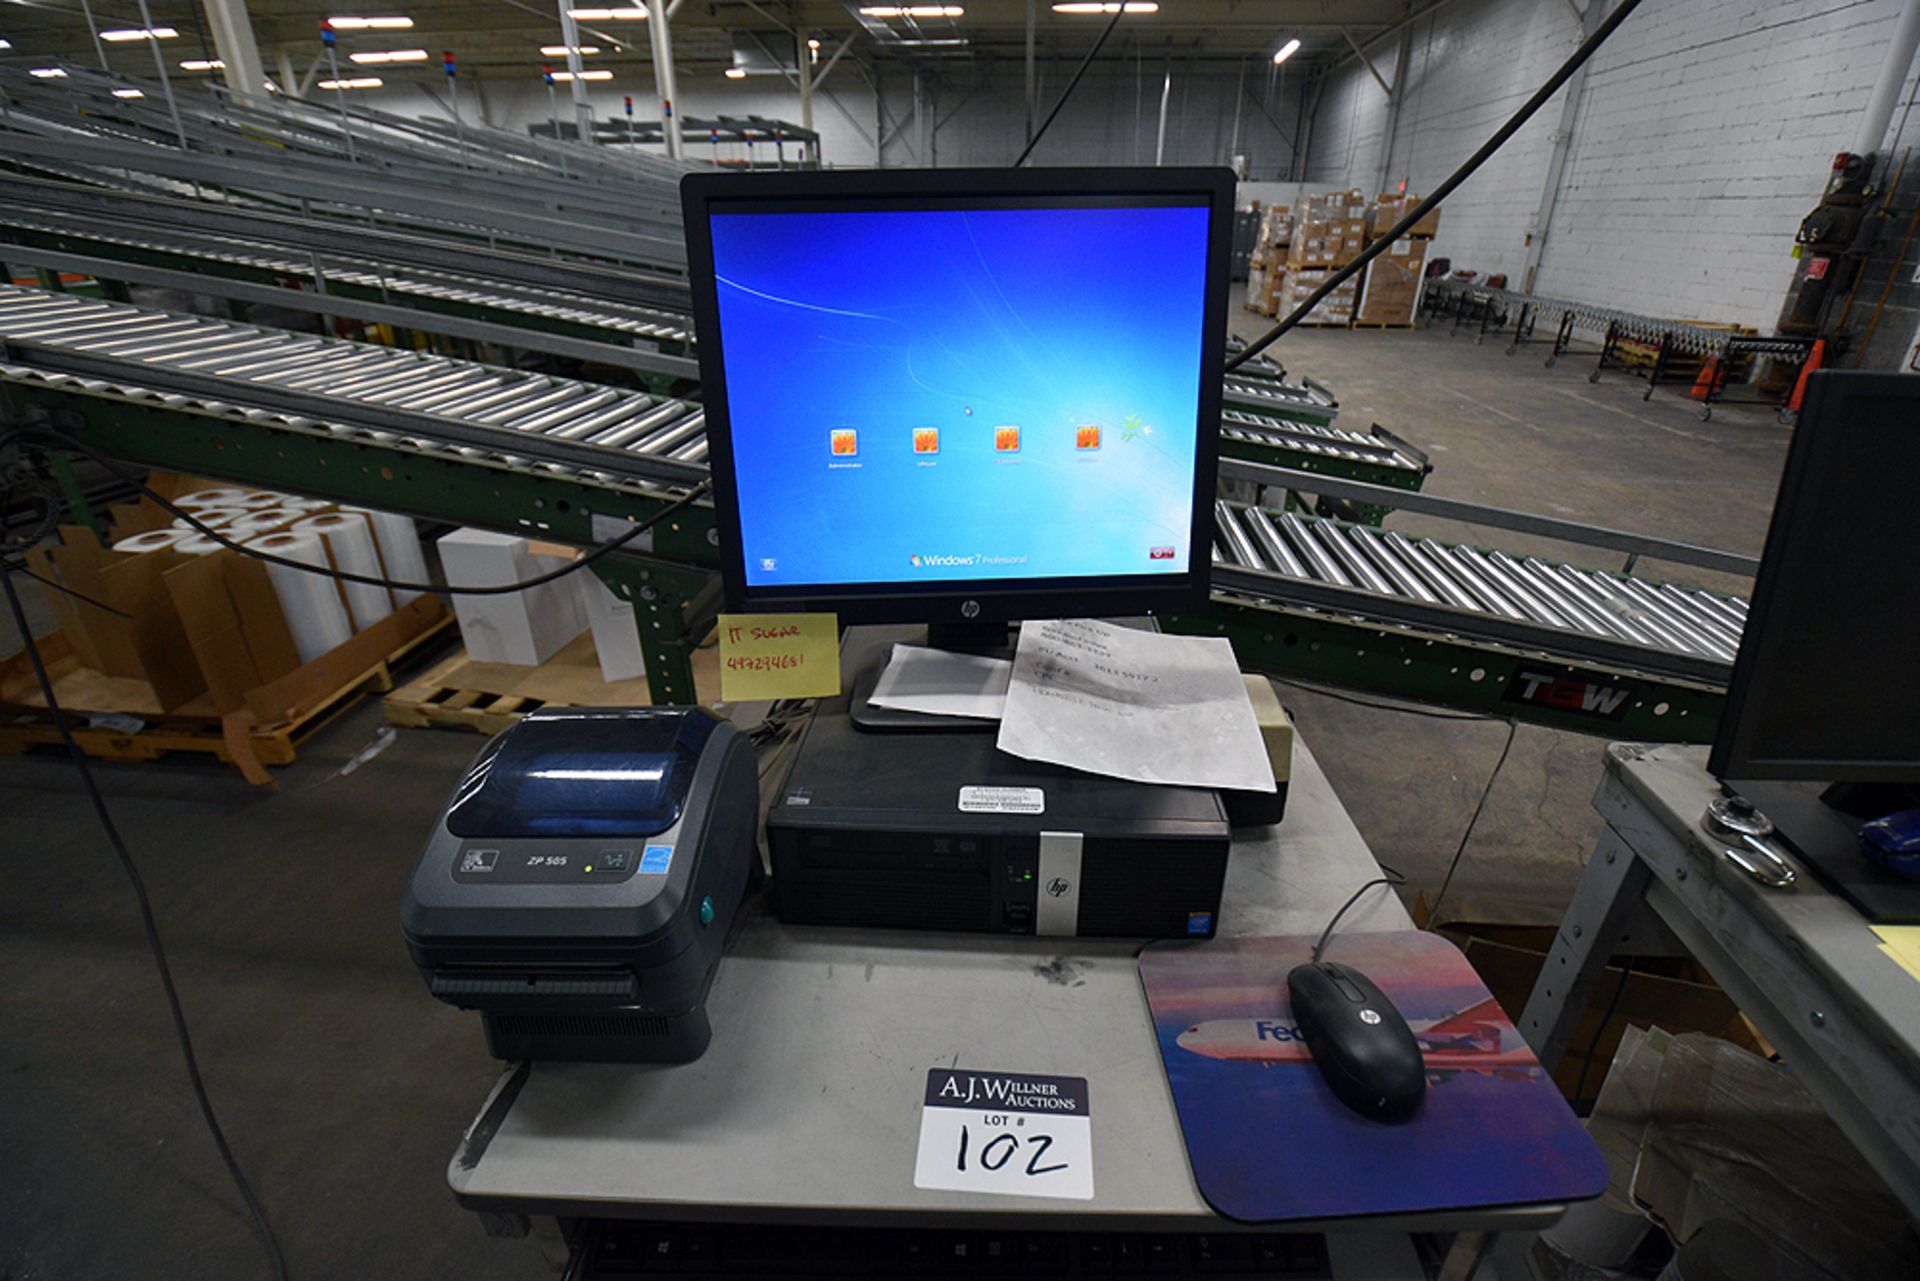 Zebra P505 Label Printer, HP RP500 i5 PC, Laser Printer, Toledo Scale & Cart - Image 2 of 4